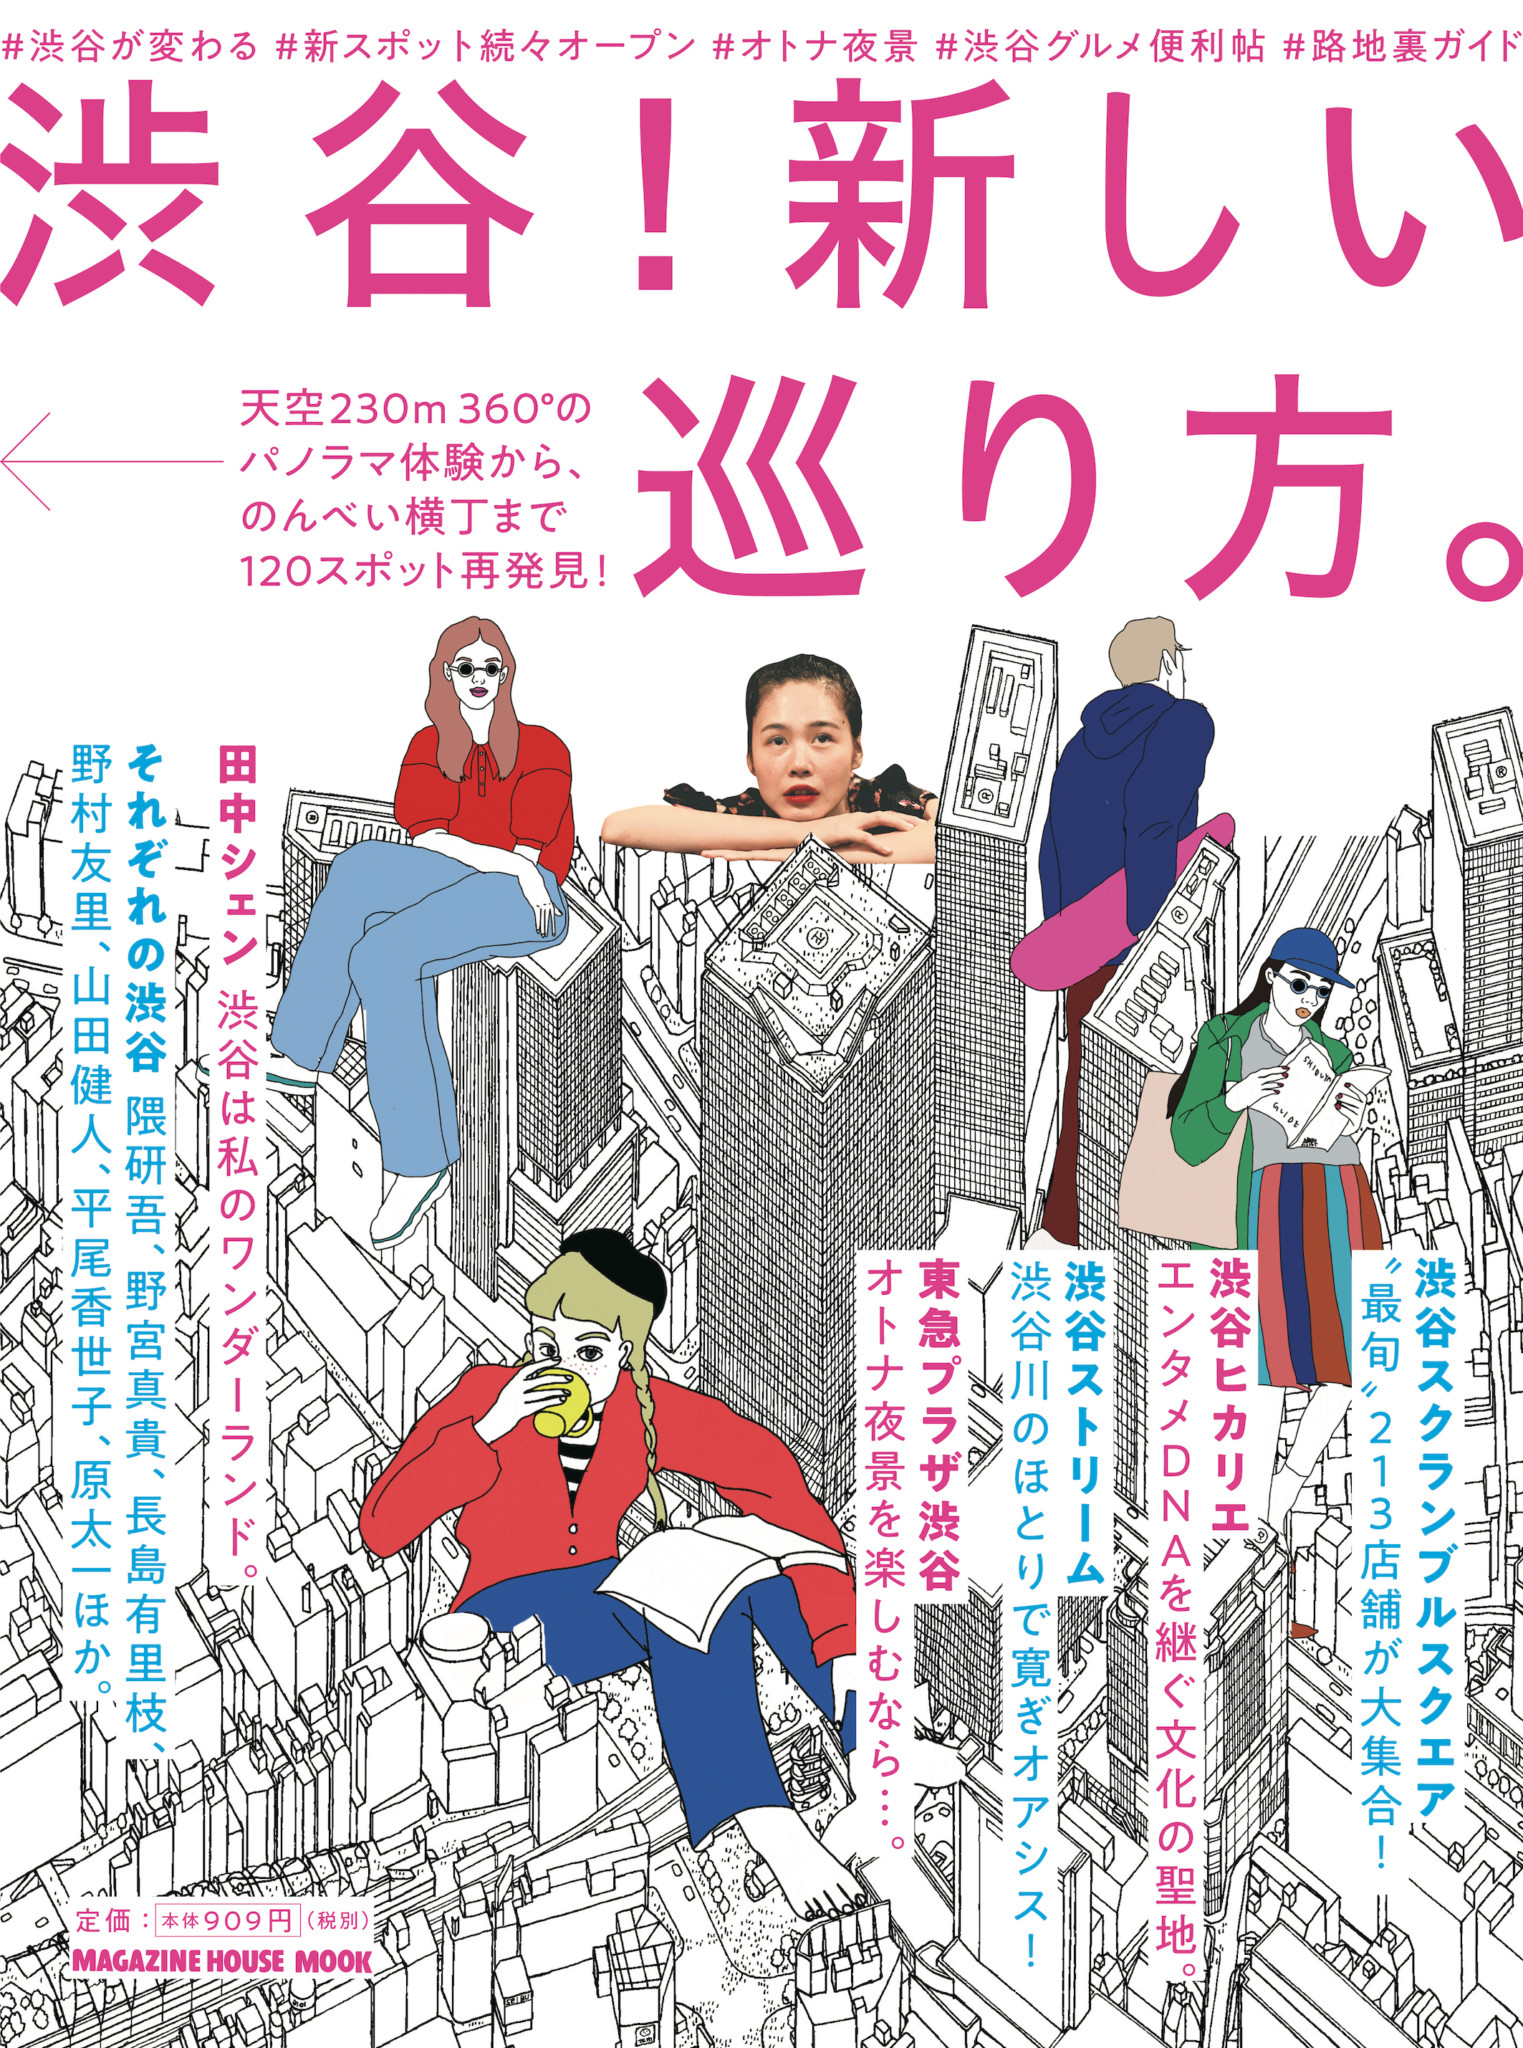 Magazine House Mook 渋谷 新しい巡り方 渋谷スクランブルスクエア小冊子 All About Shibuya Scramble Square 渋谷スクランブルスクエア株式会社 ほか Works Mcs マガジンハウス クリエイティブ スタジオ